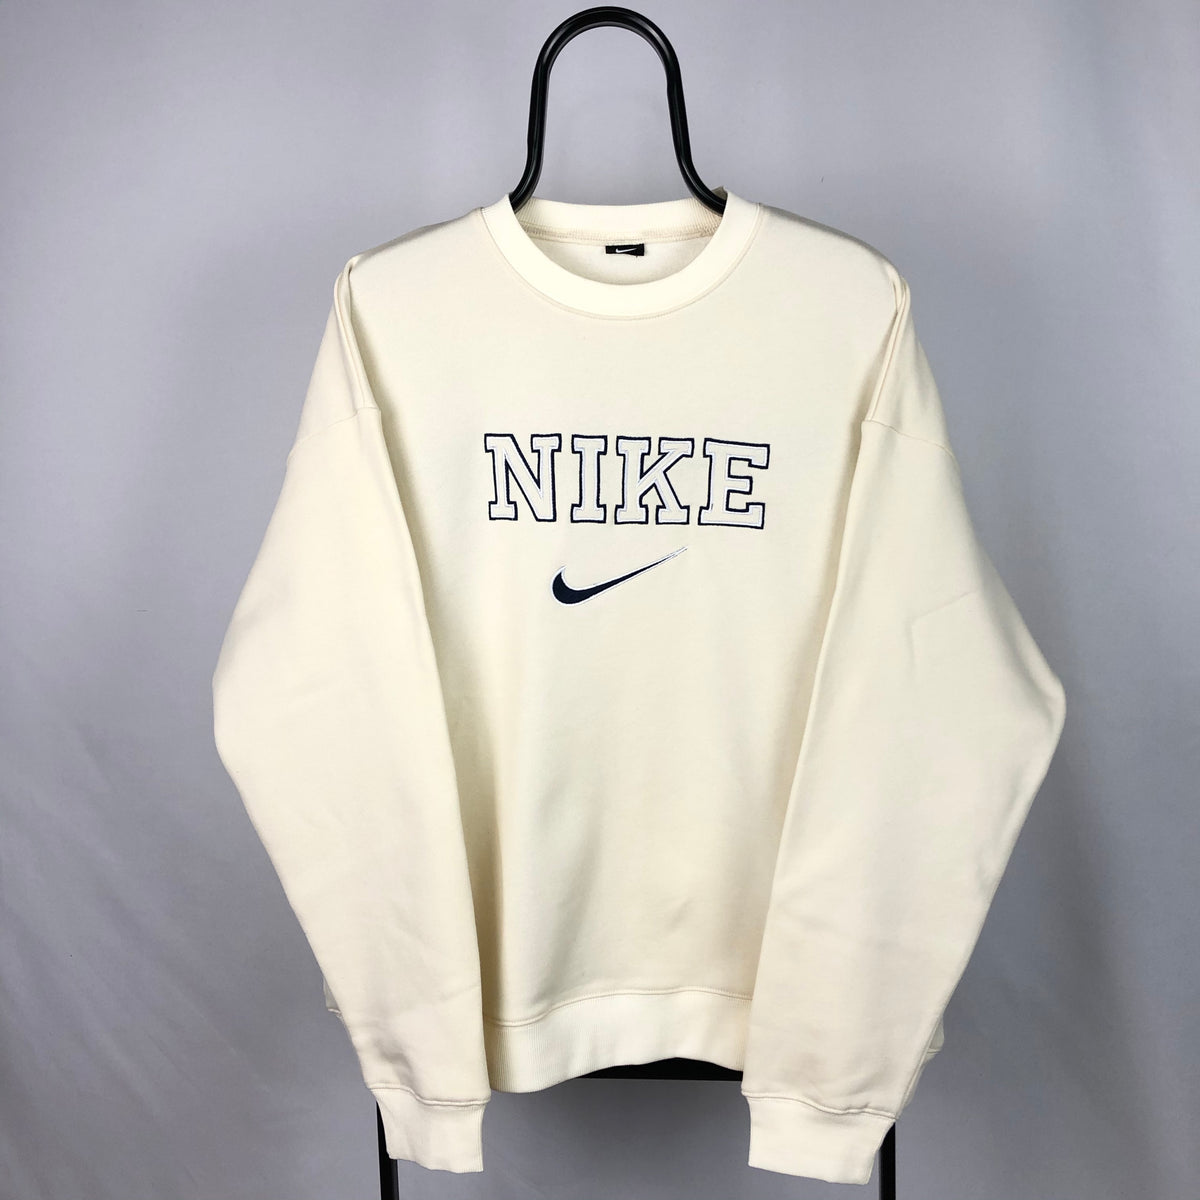 Nike Spellout Sweatshirt in Cream - Men's Large/Women's XL - Vintique ...